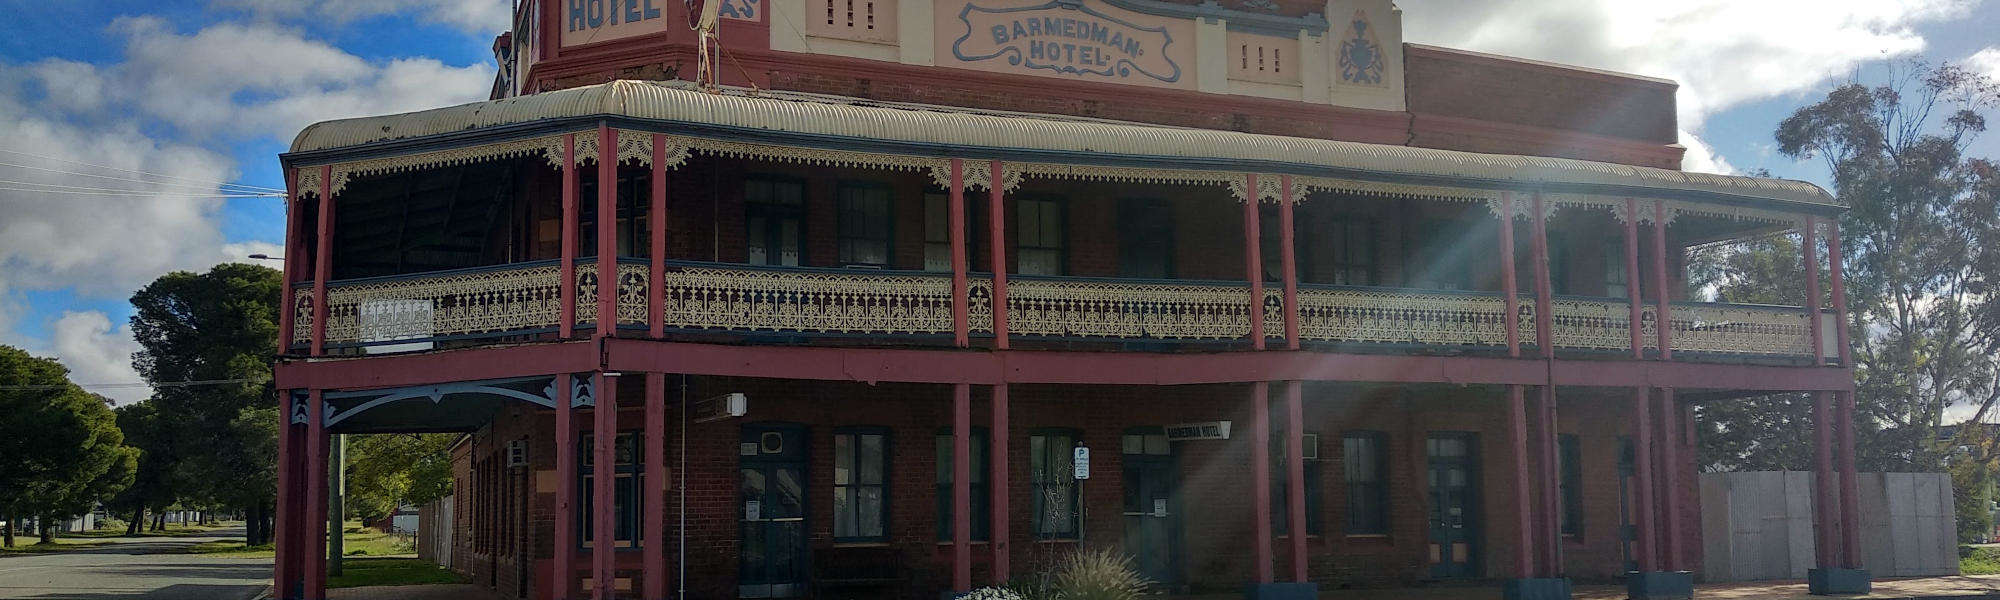 Barmedman Hotel